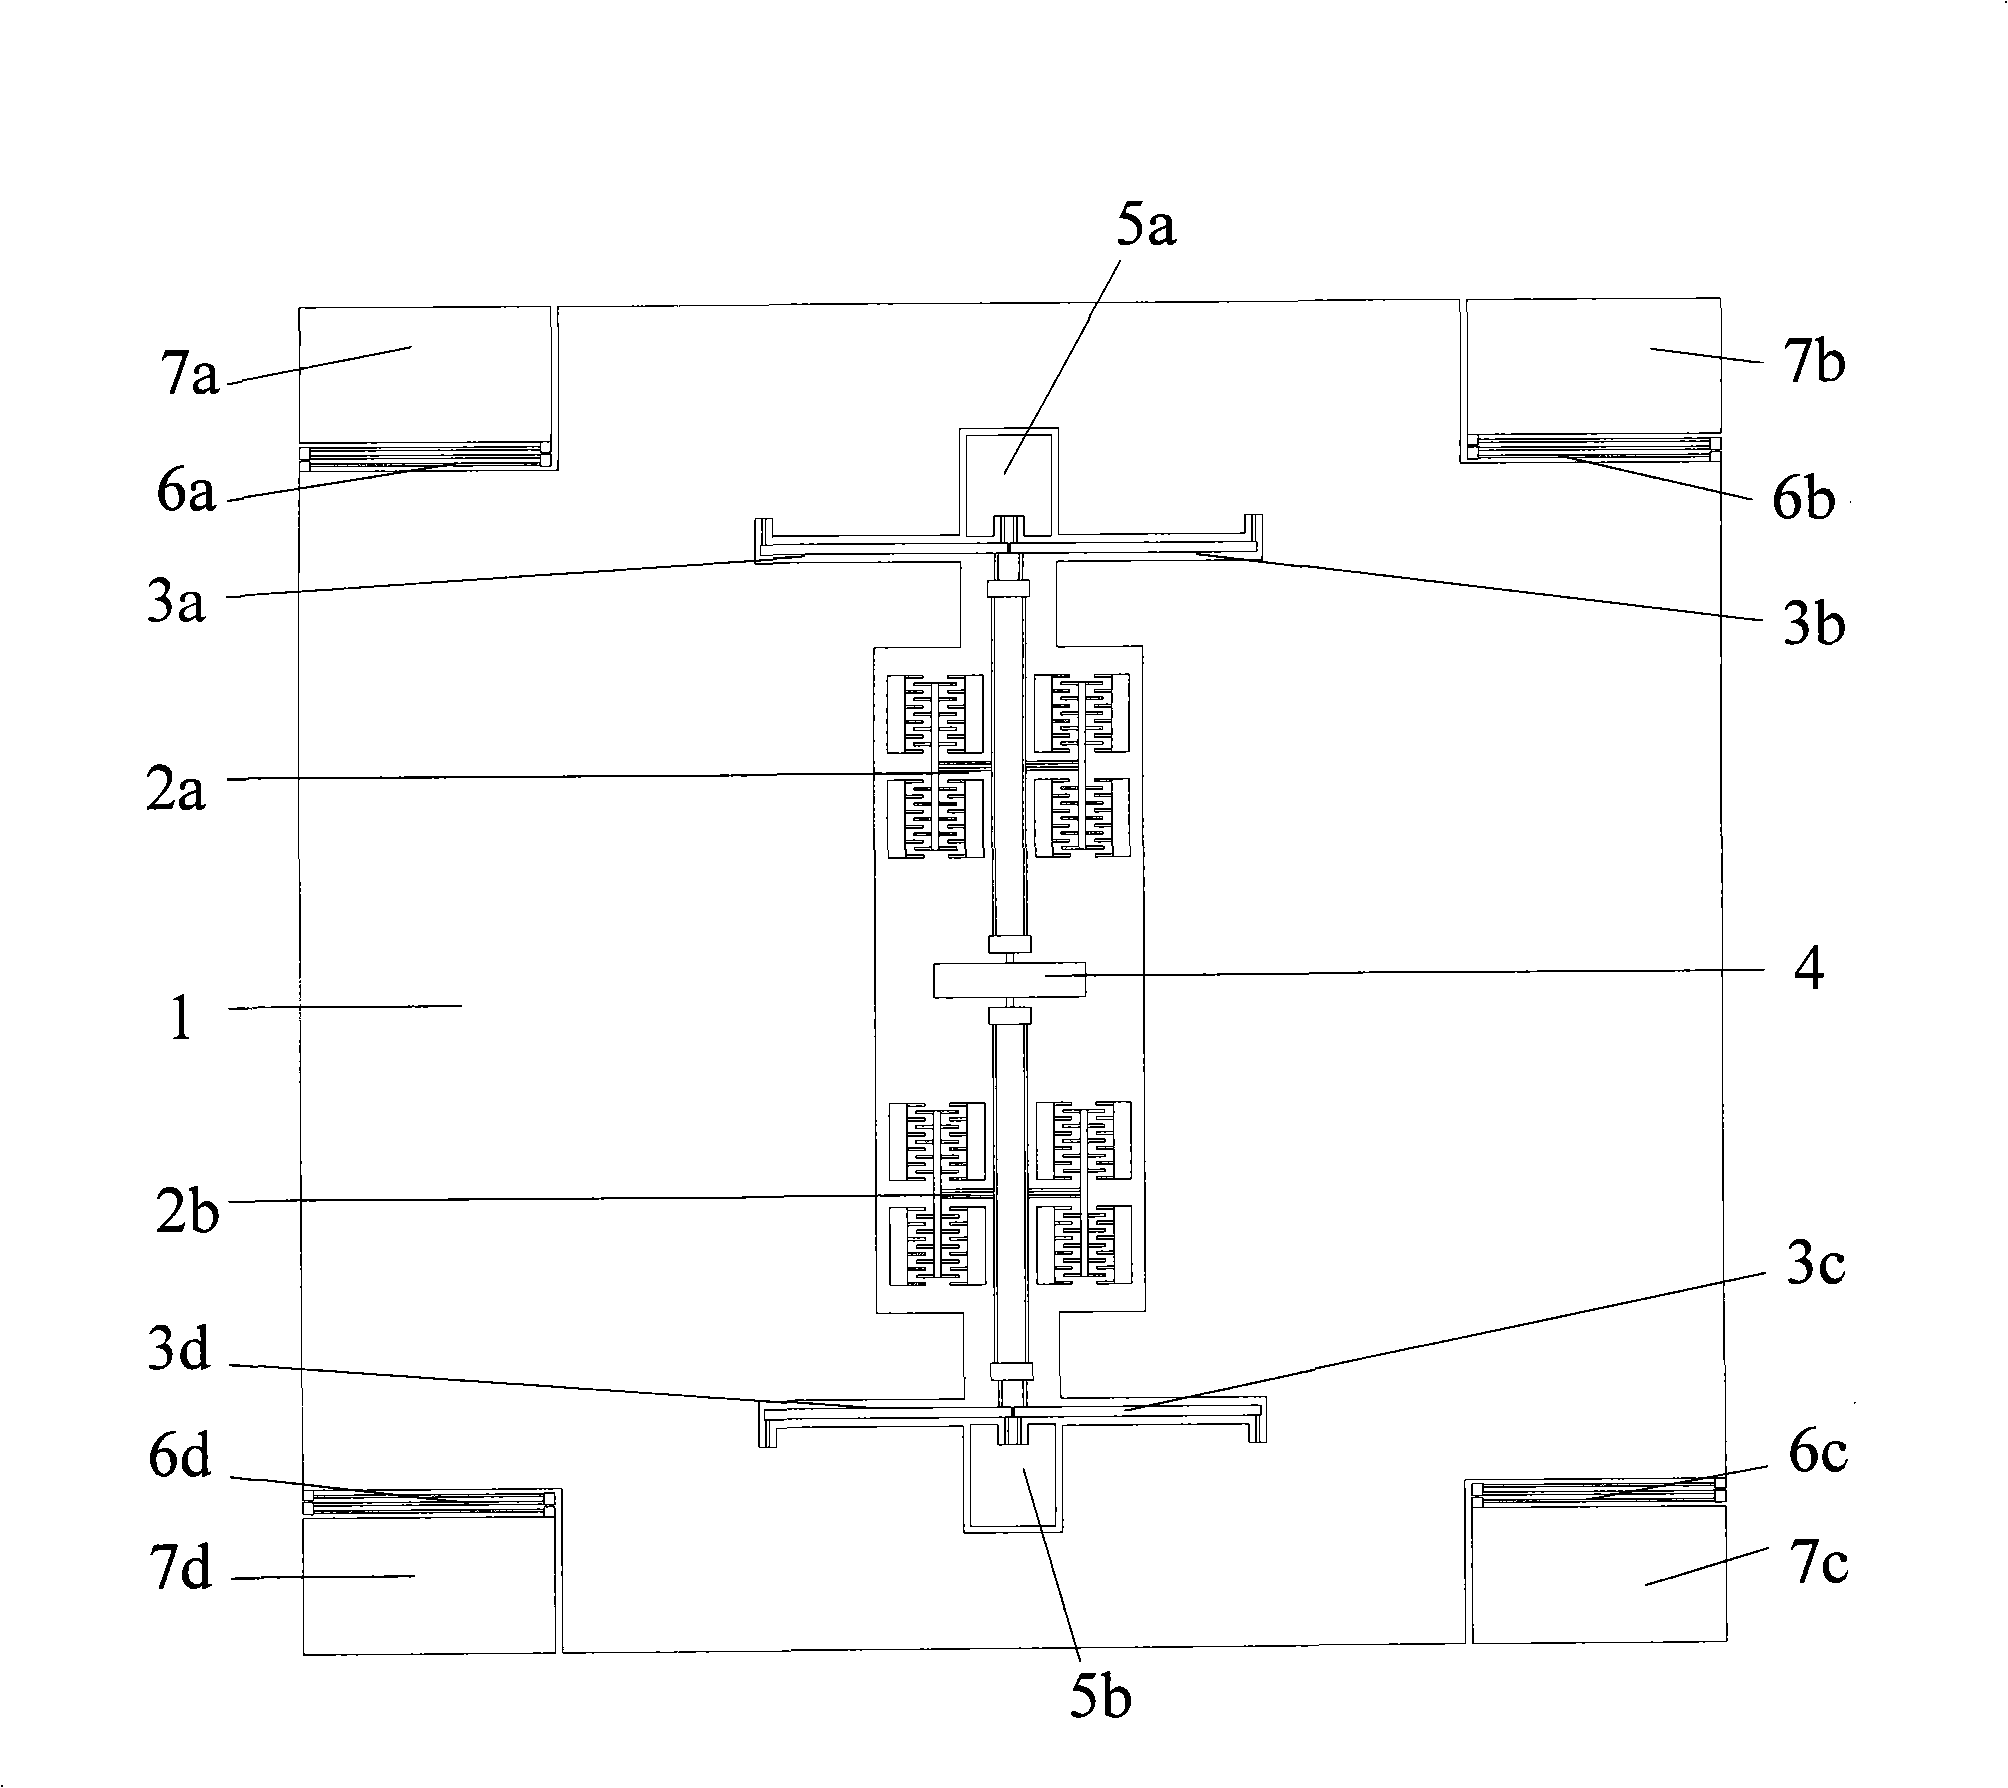 Silicon micro-resonance type accelerometer